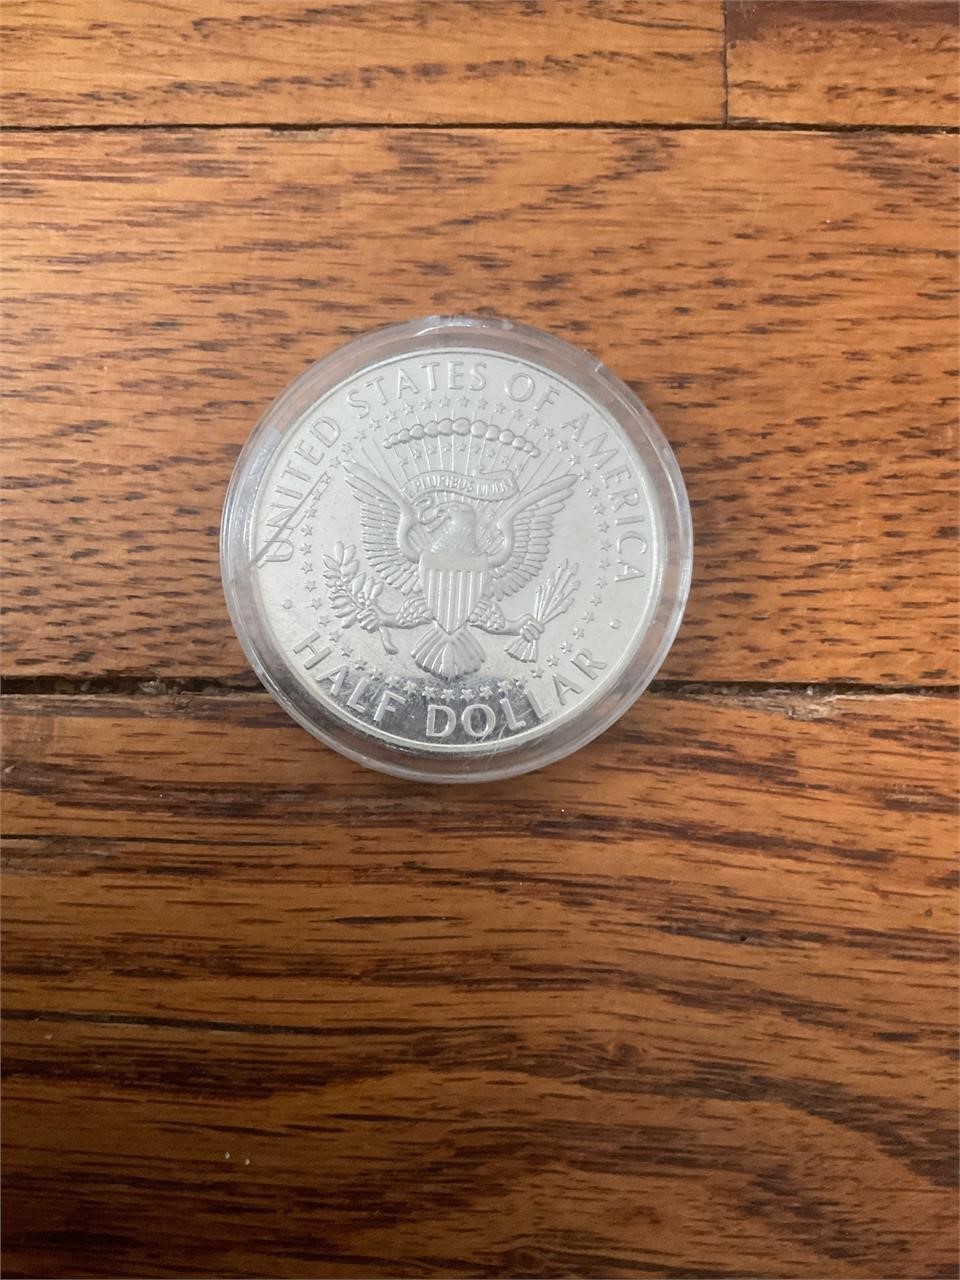 Melinda trump memorabilia coin